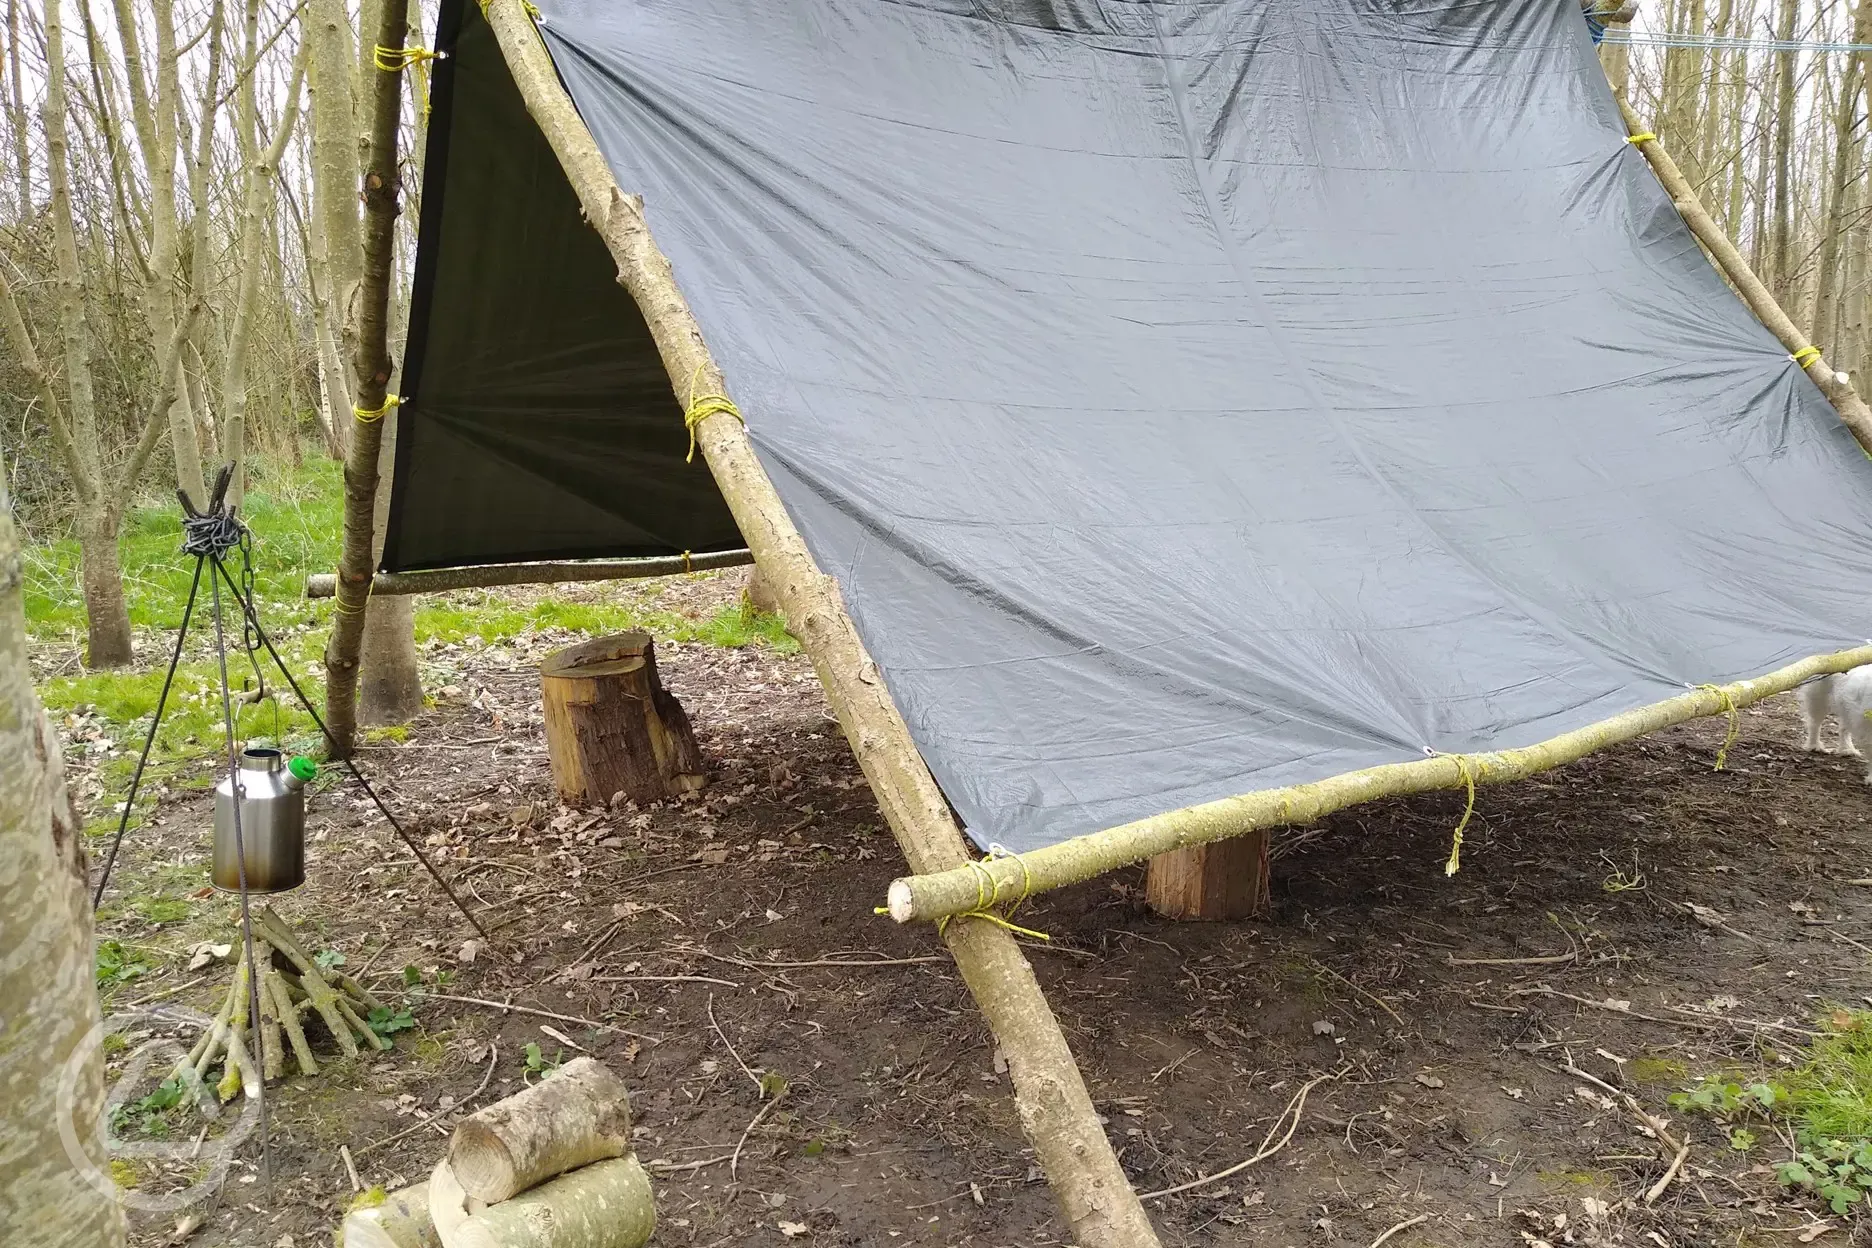 A frame tarp shelter setup and ready.